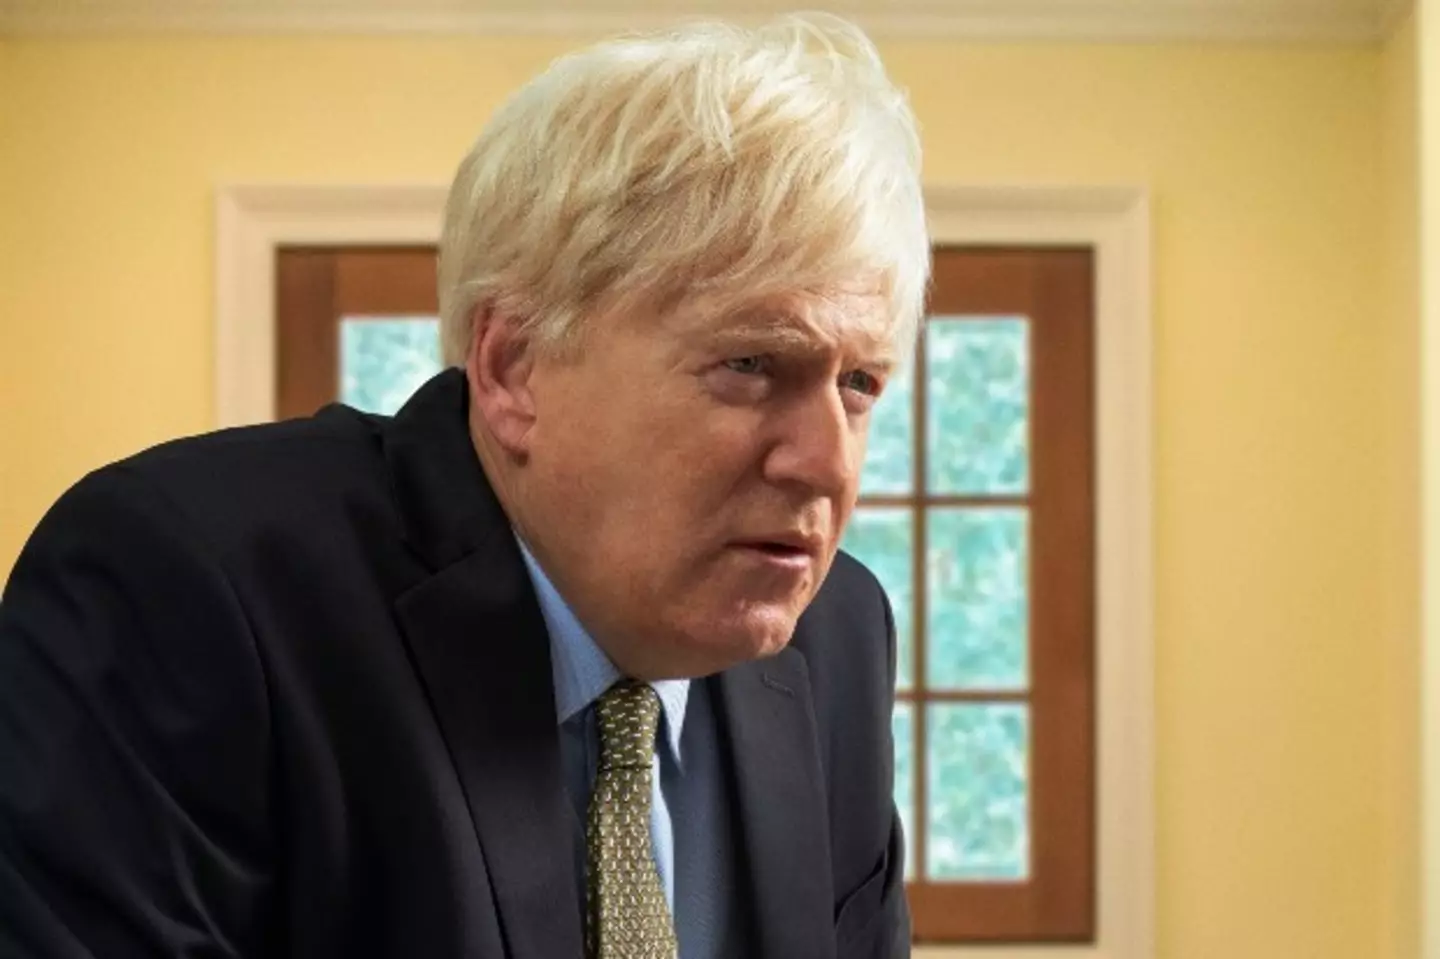 Kenneth Branagh will star as Boris Johnson (